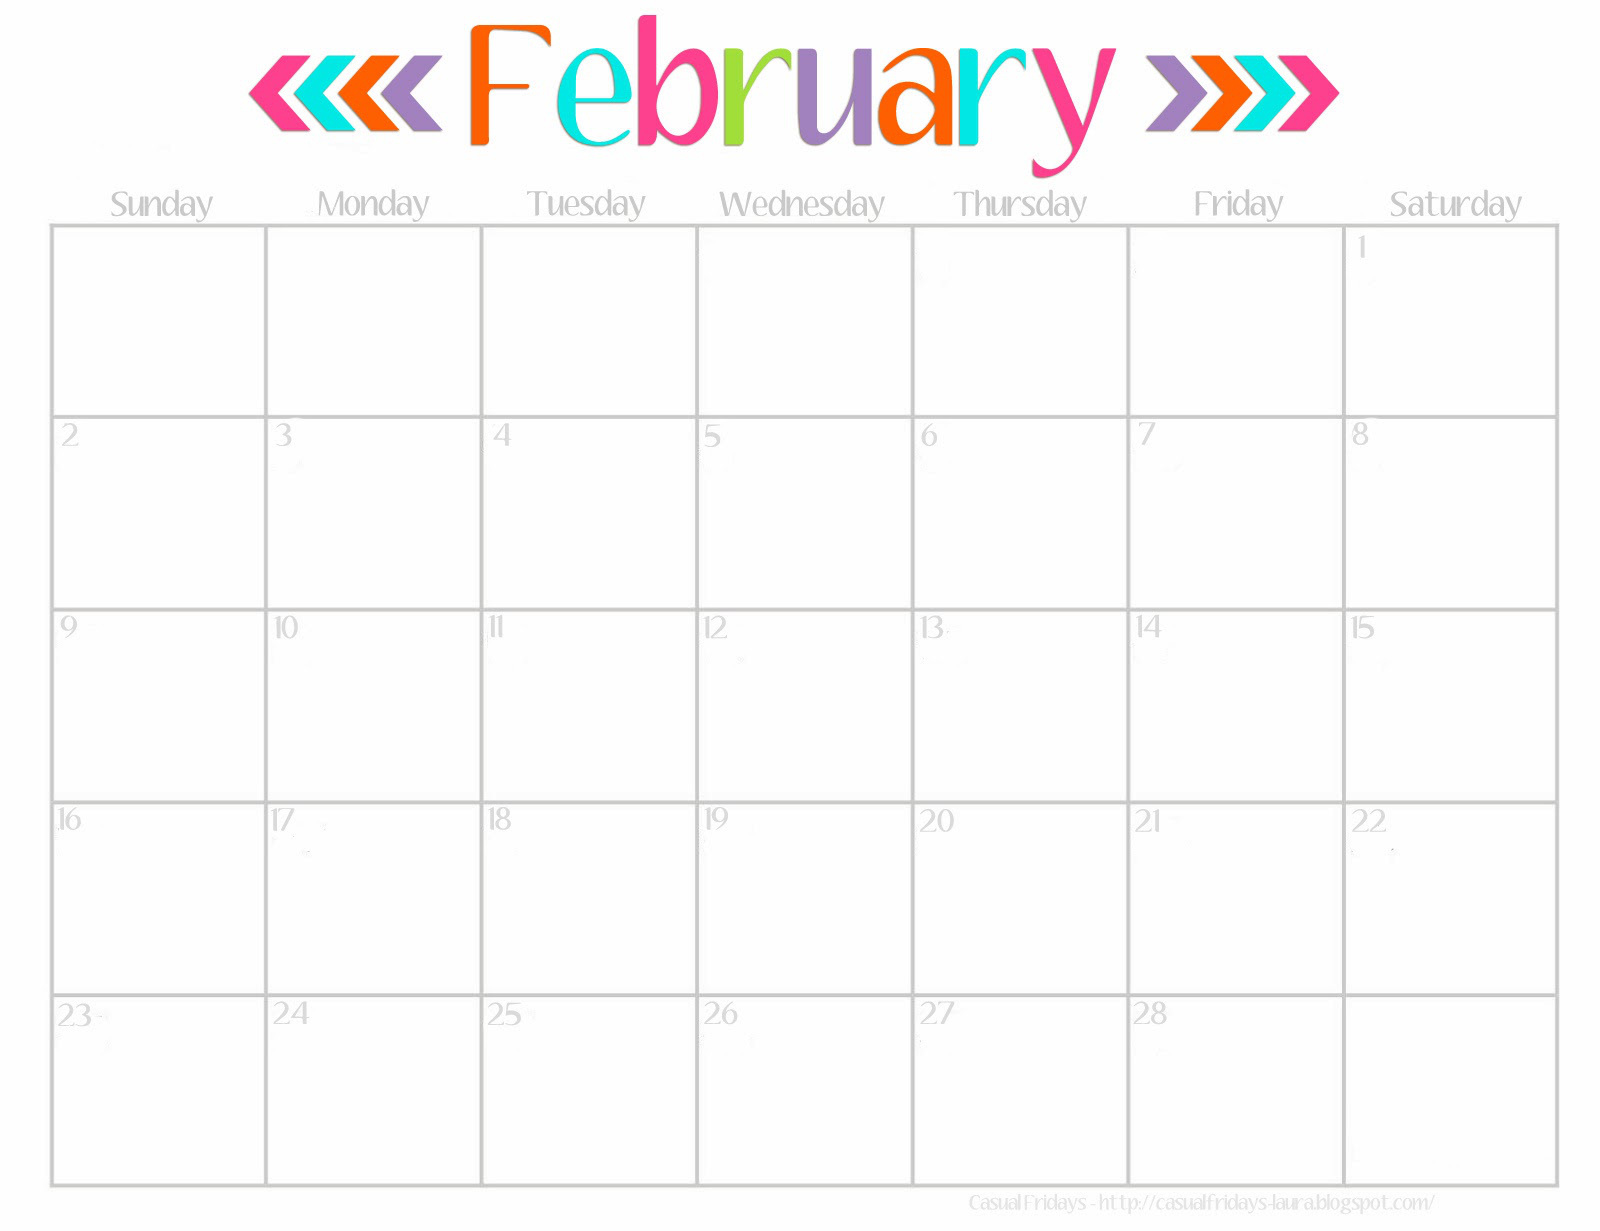 February 2016 Calendar Printablejpg free calendar 2016